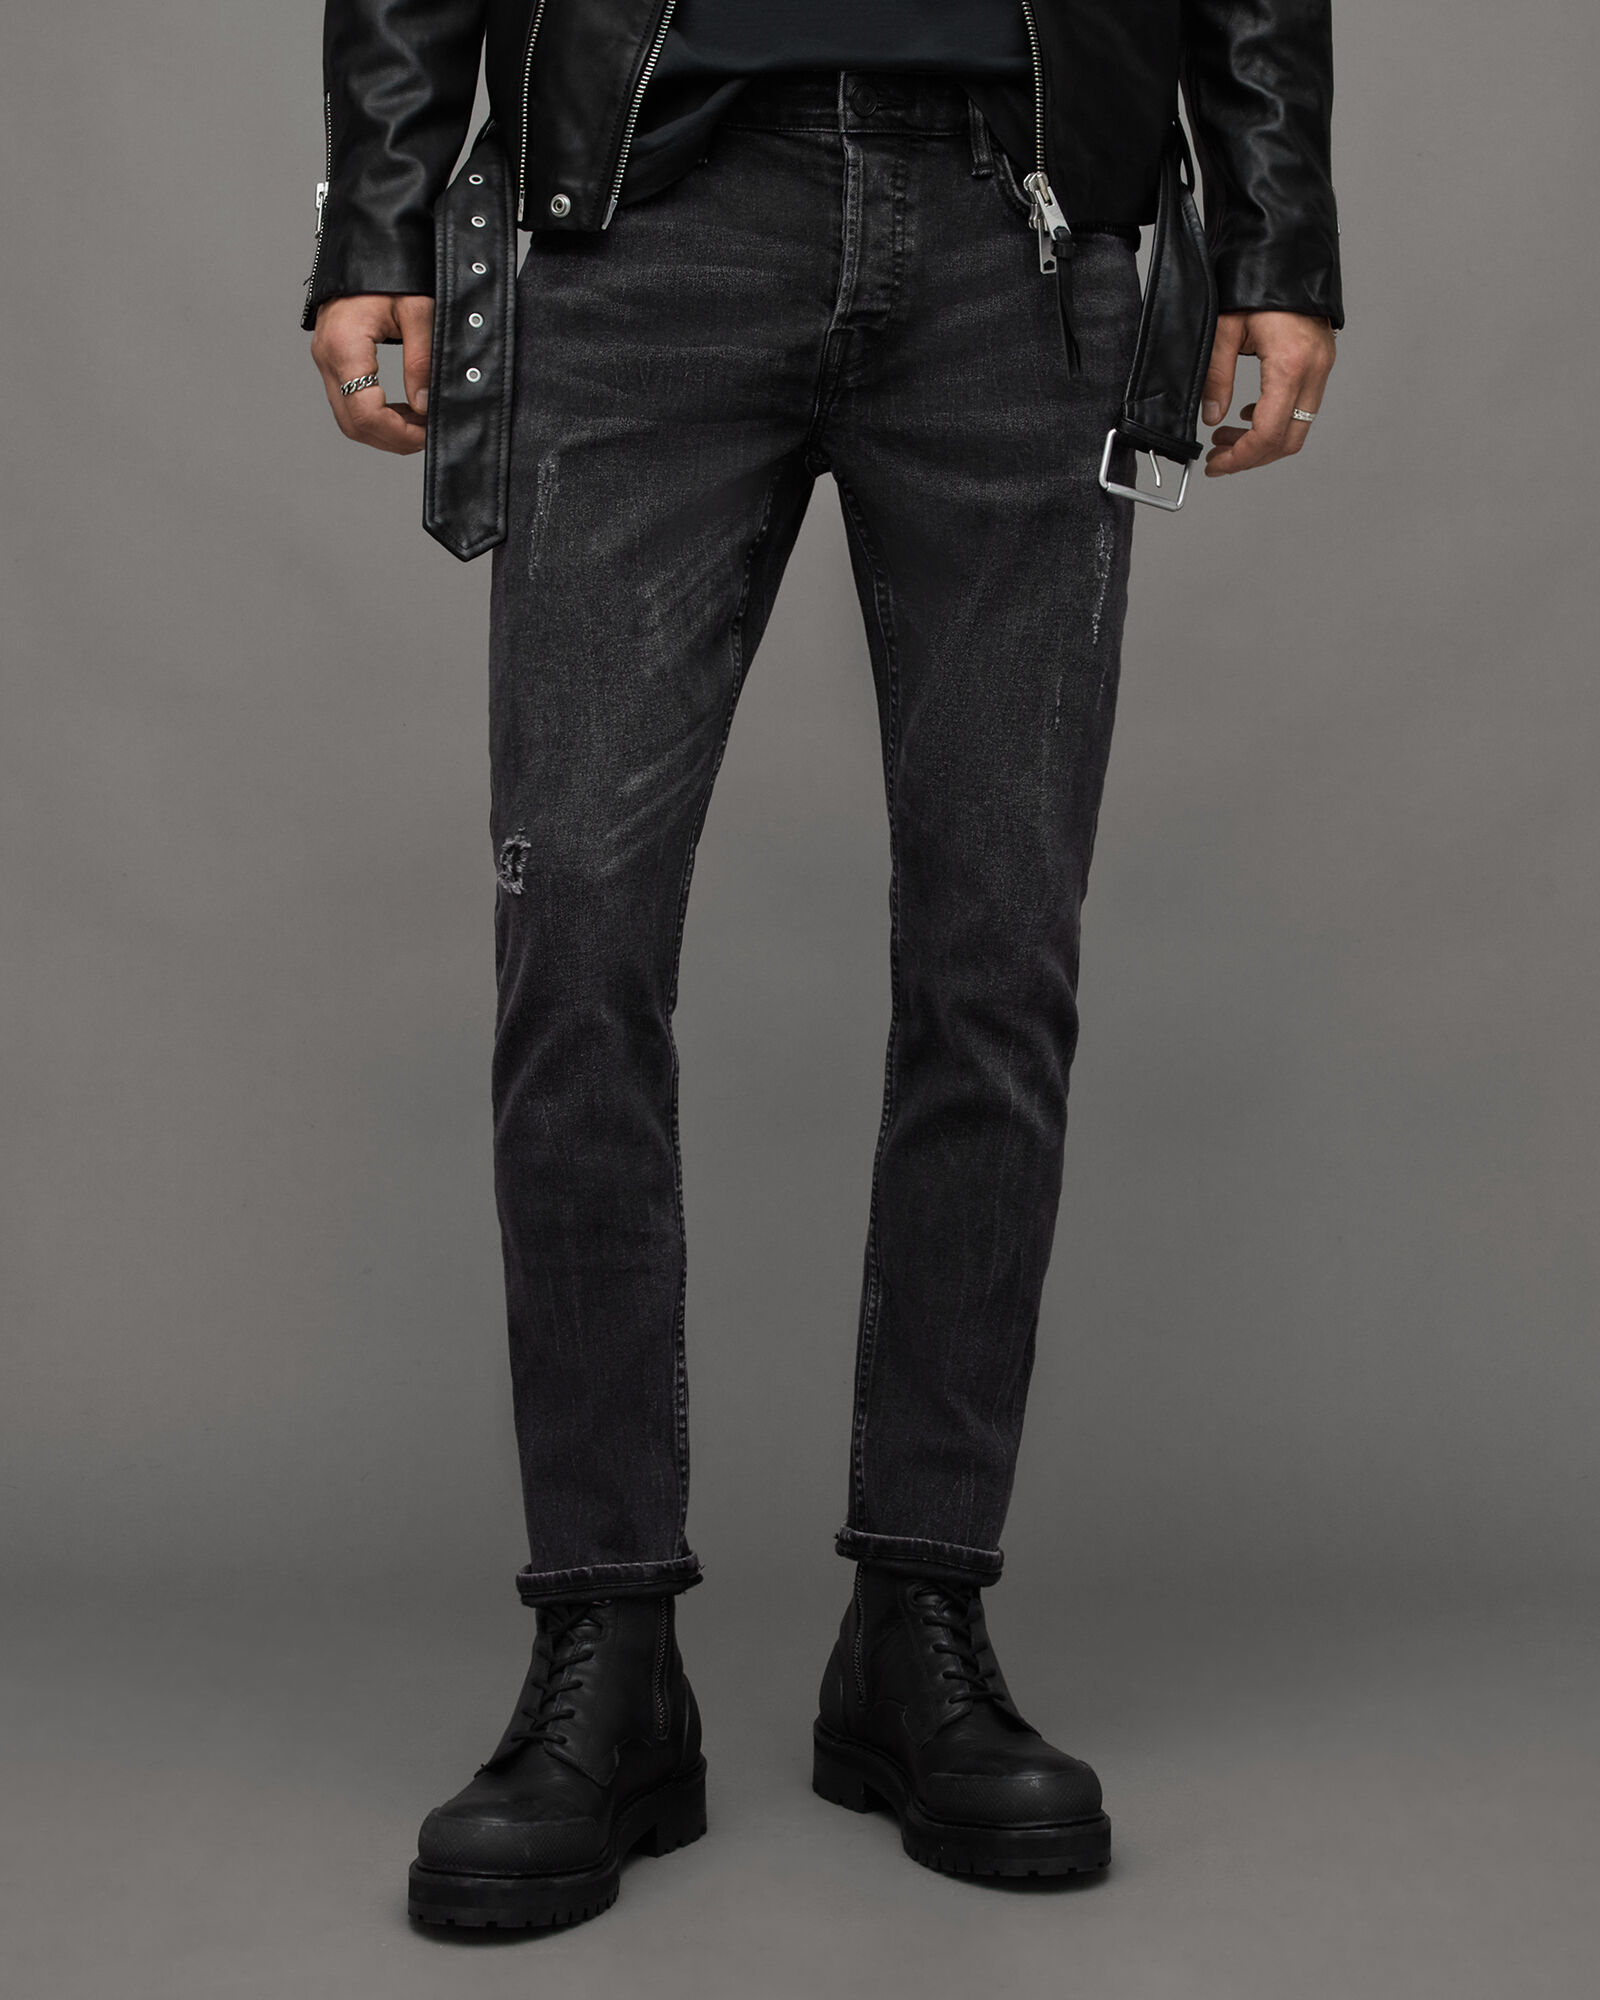 Aggregate 220+ black grey jeans best